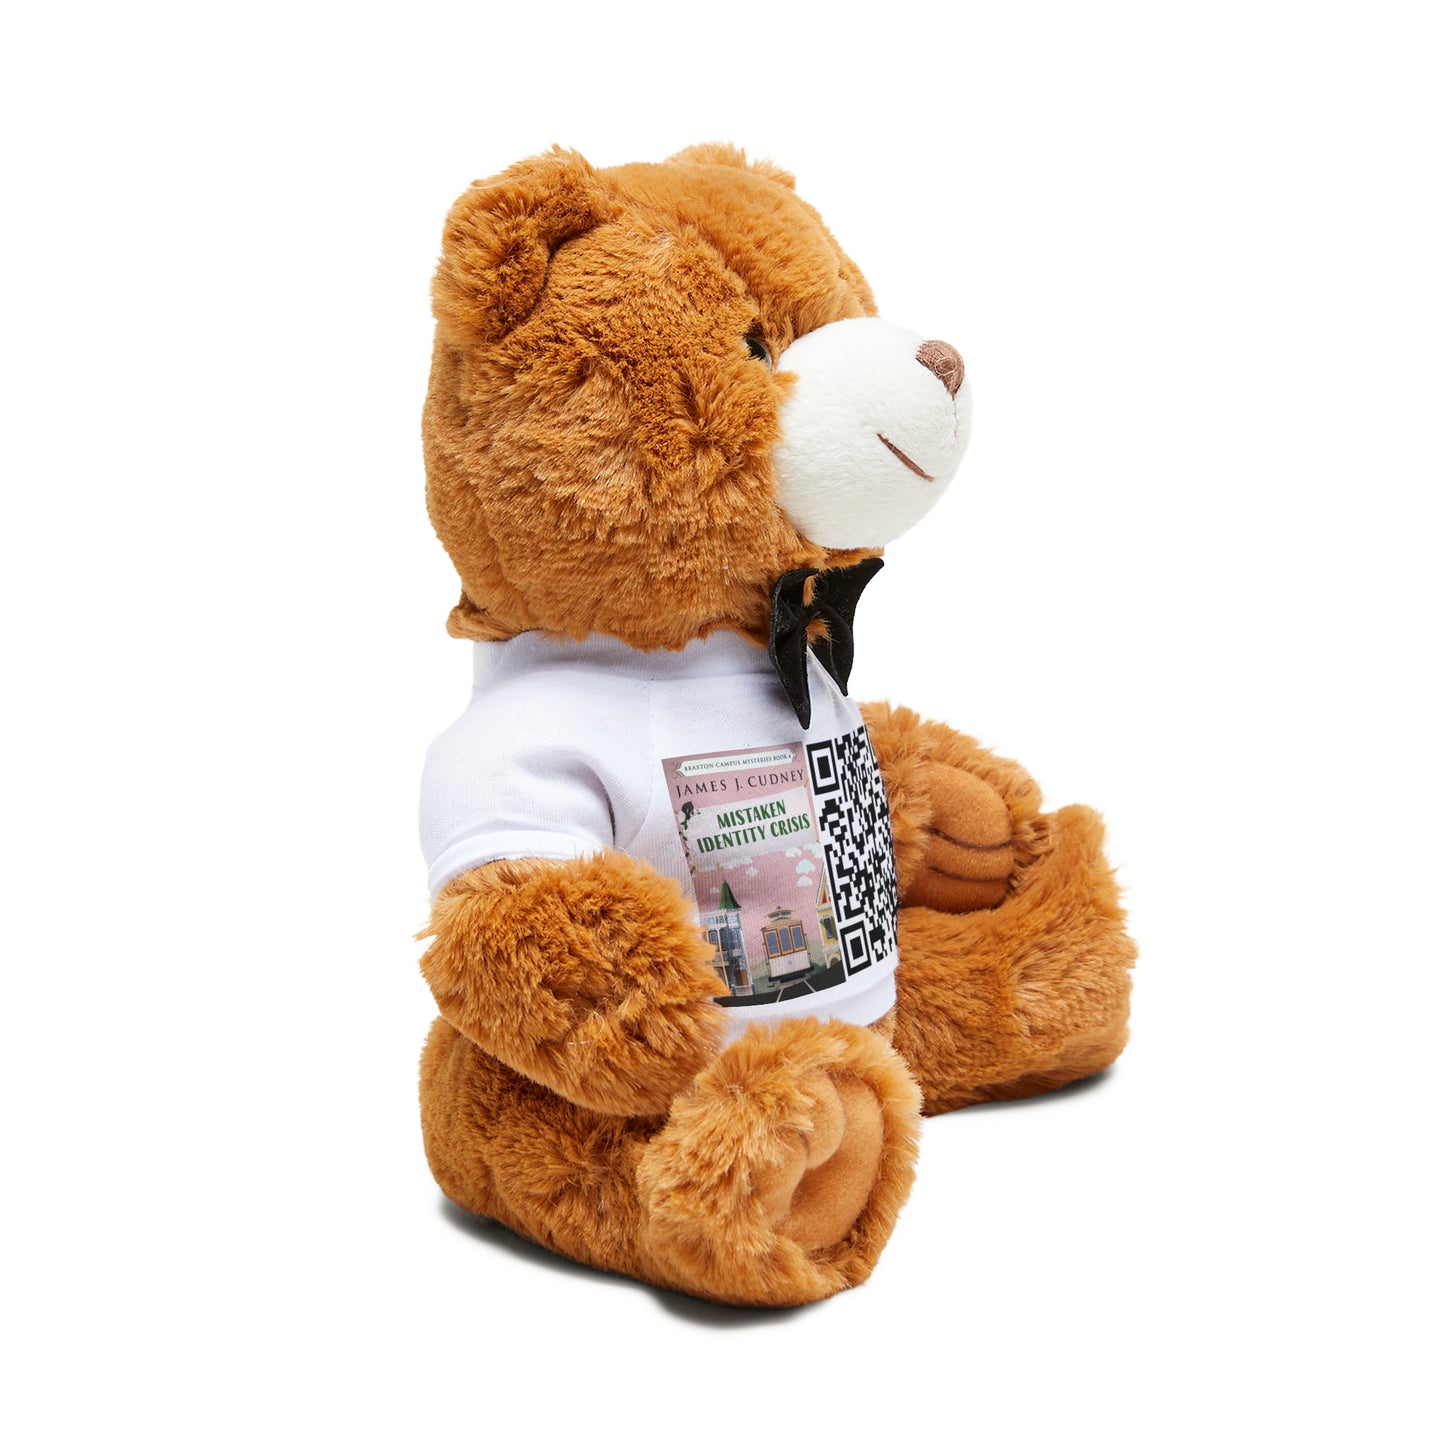 Mistaken Identity Crisis - Teddy Bear